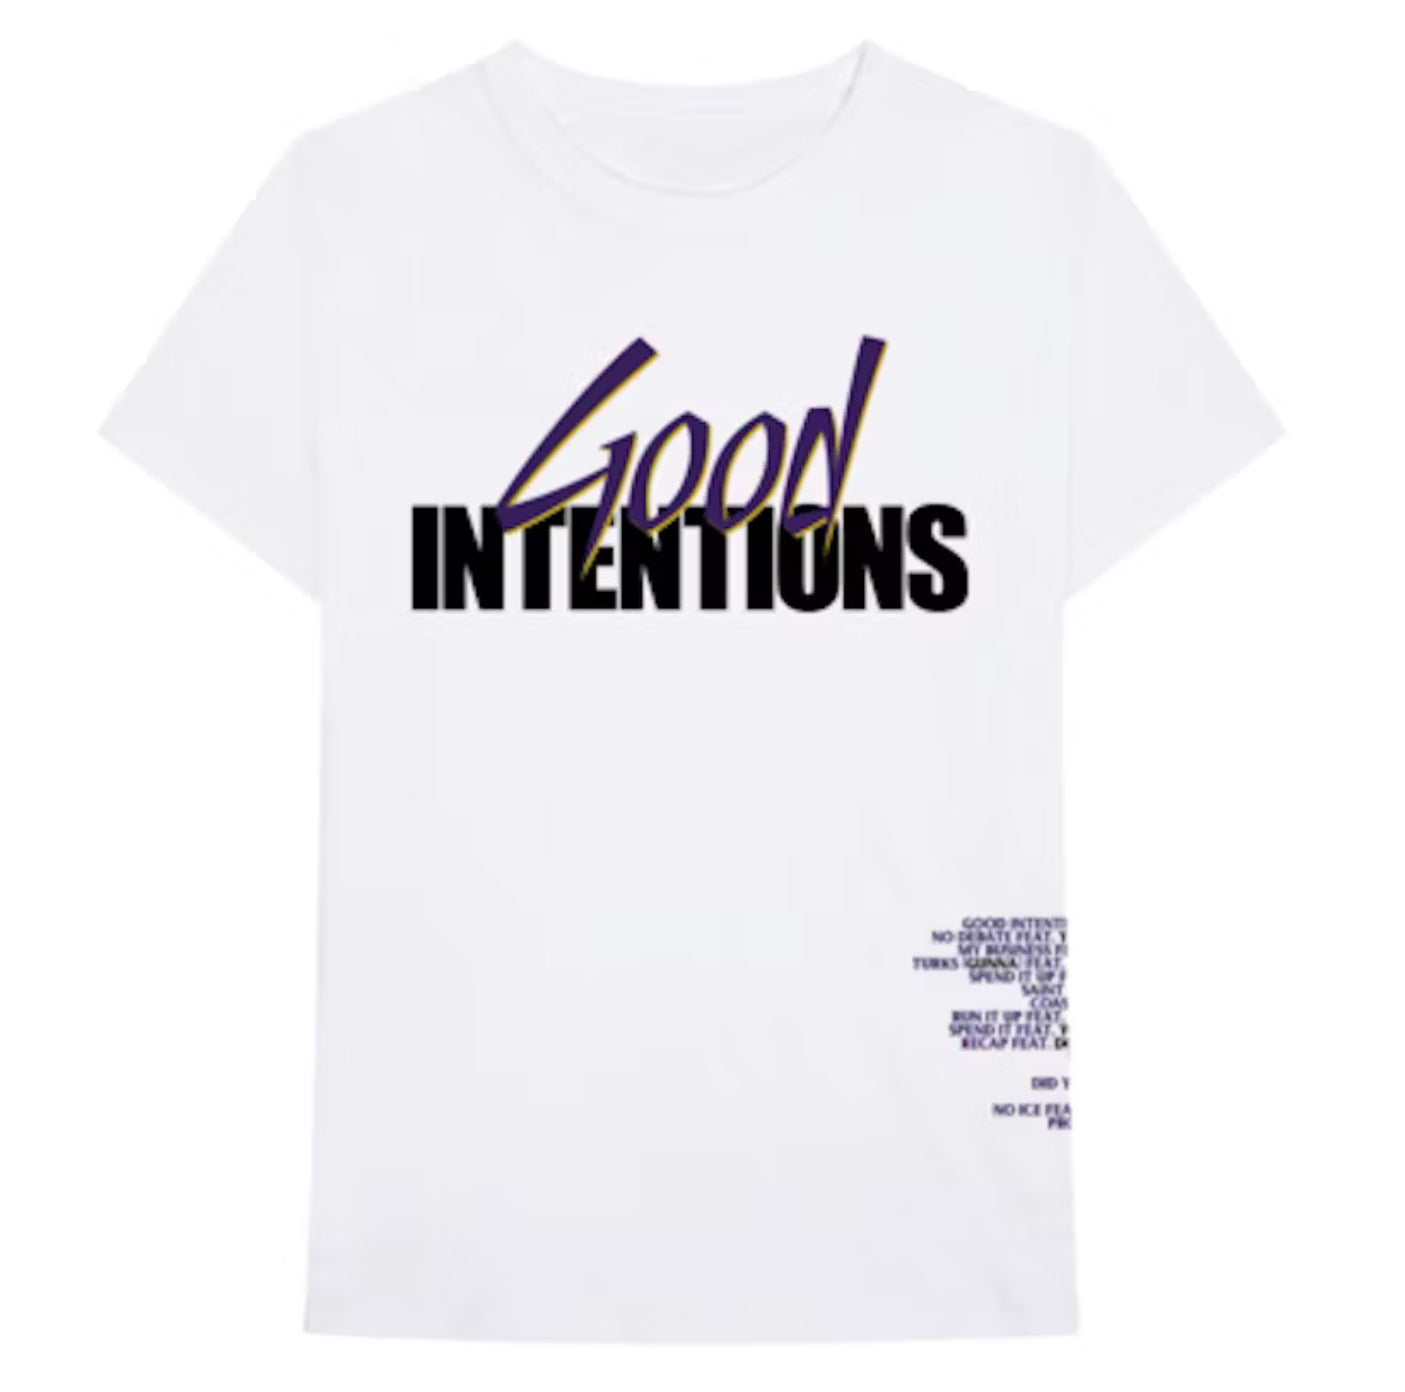 Vlone x Nav “Good Intentions” Tee